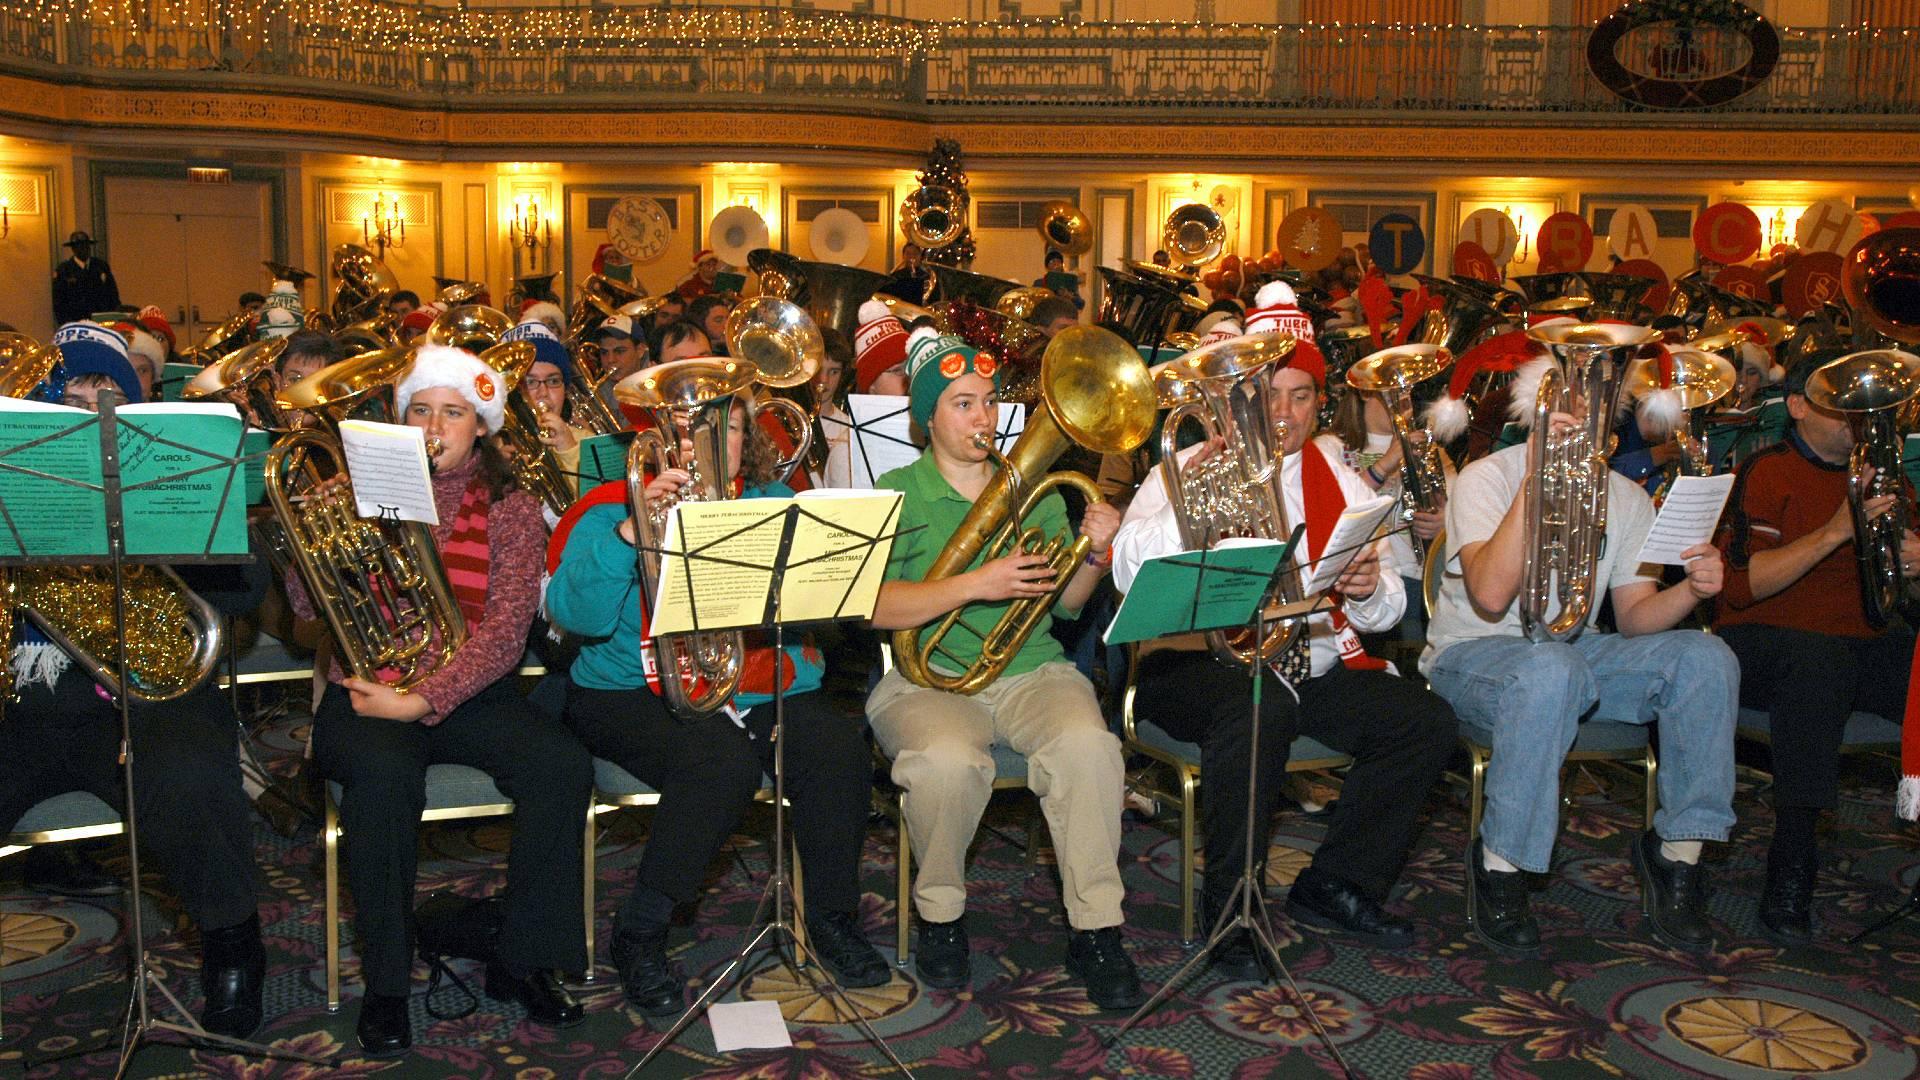 The annual Tuba Christmas returns. (Credit: The Palmer House, a Hilton Hotel)